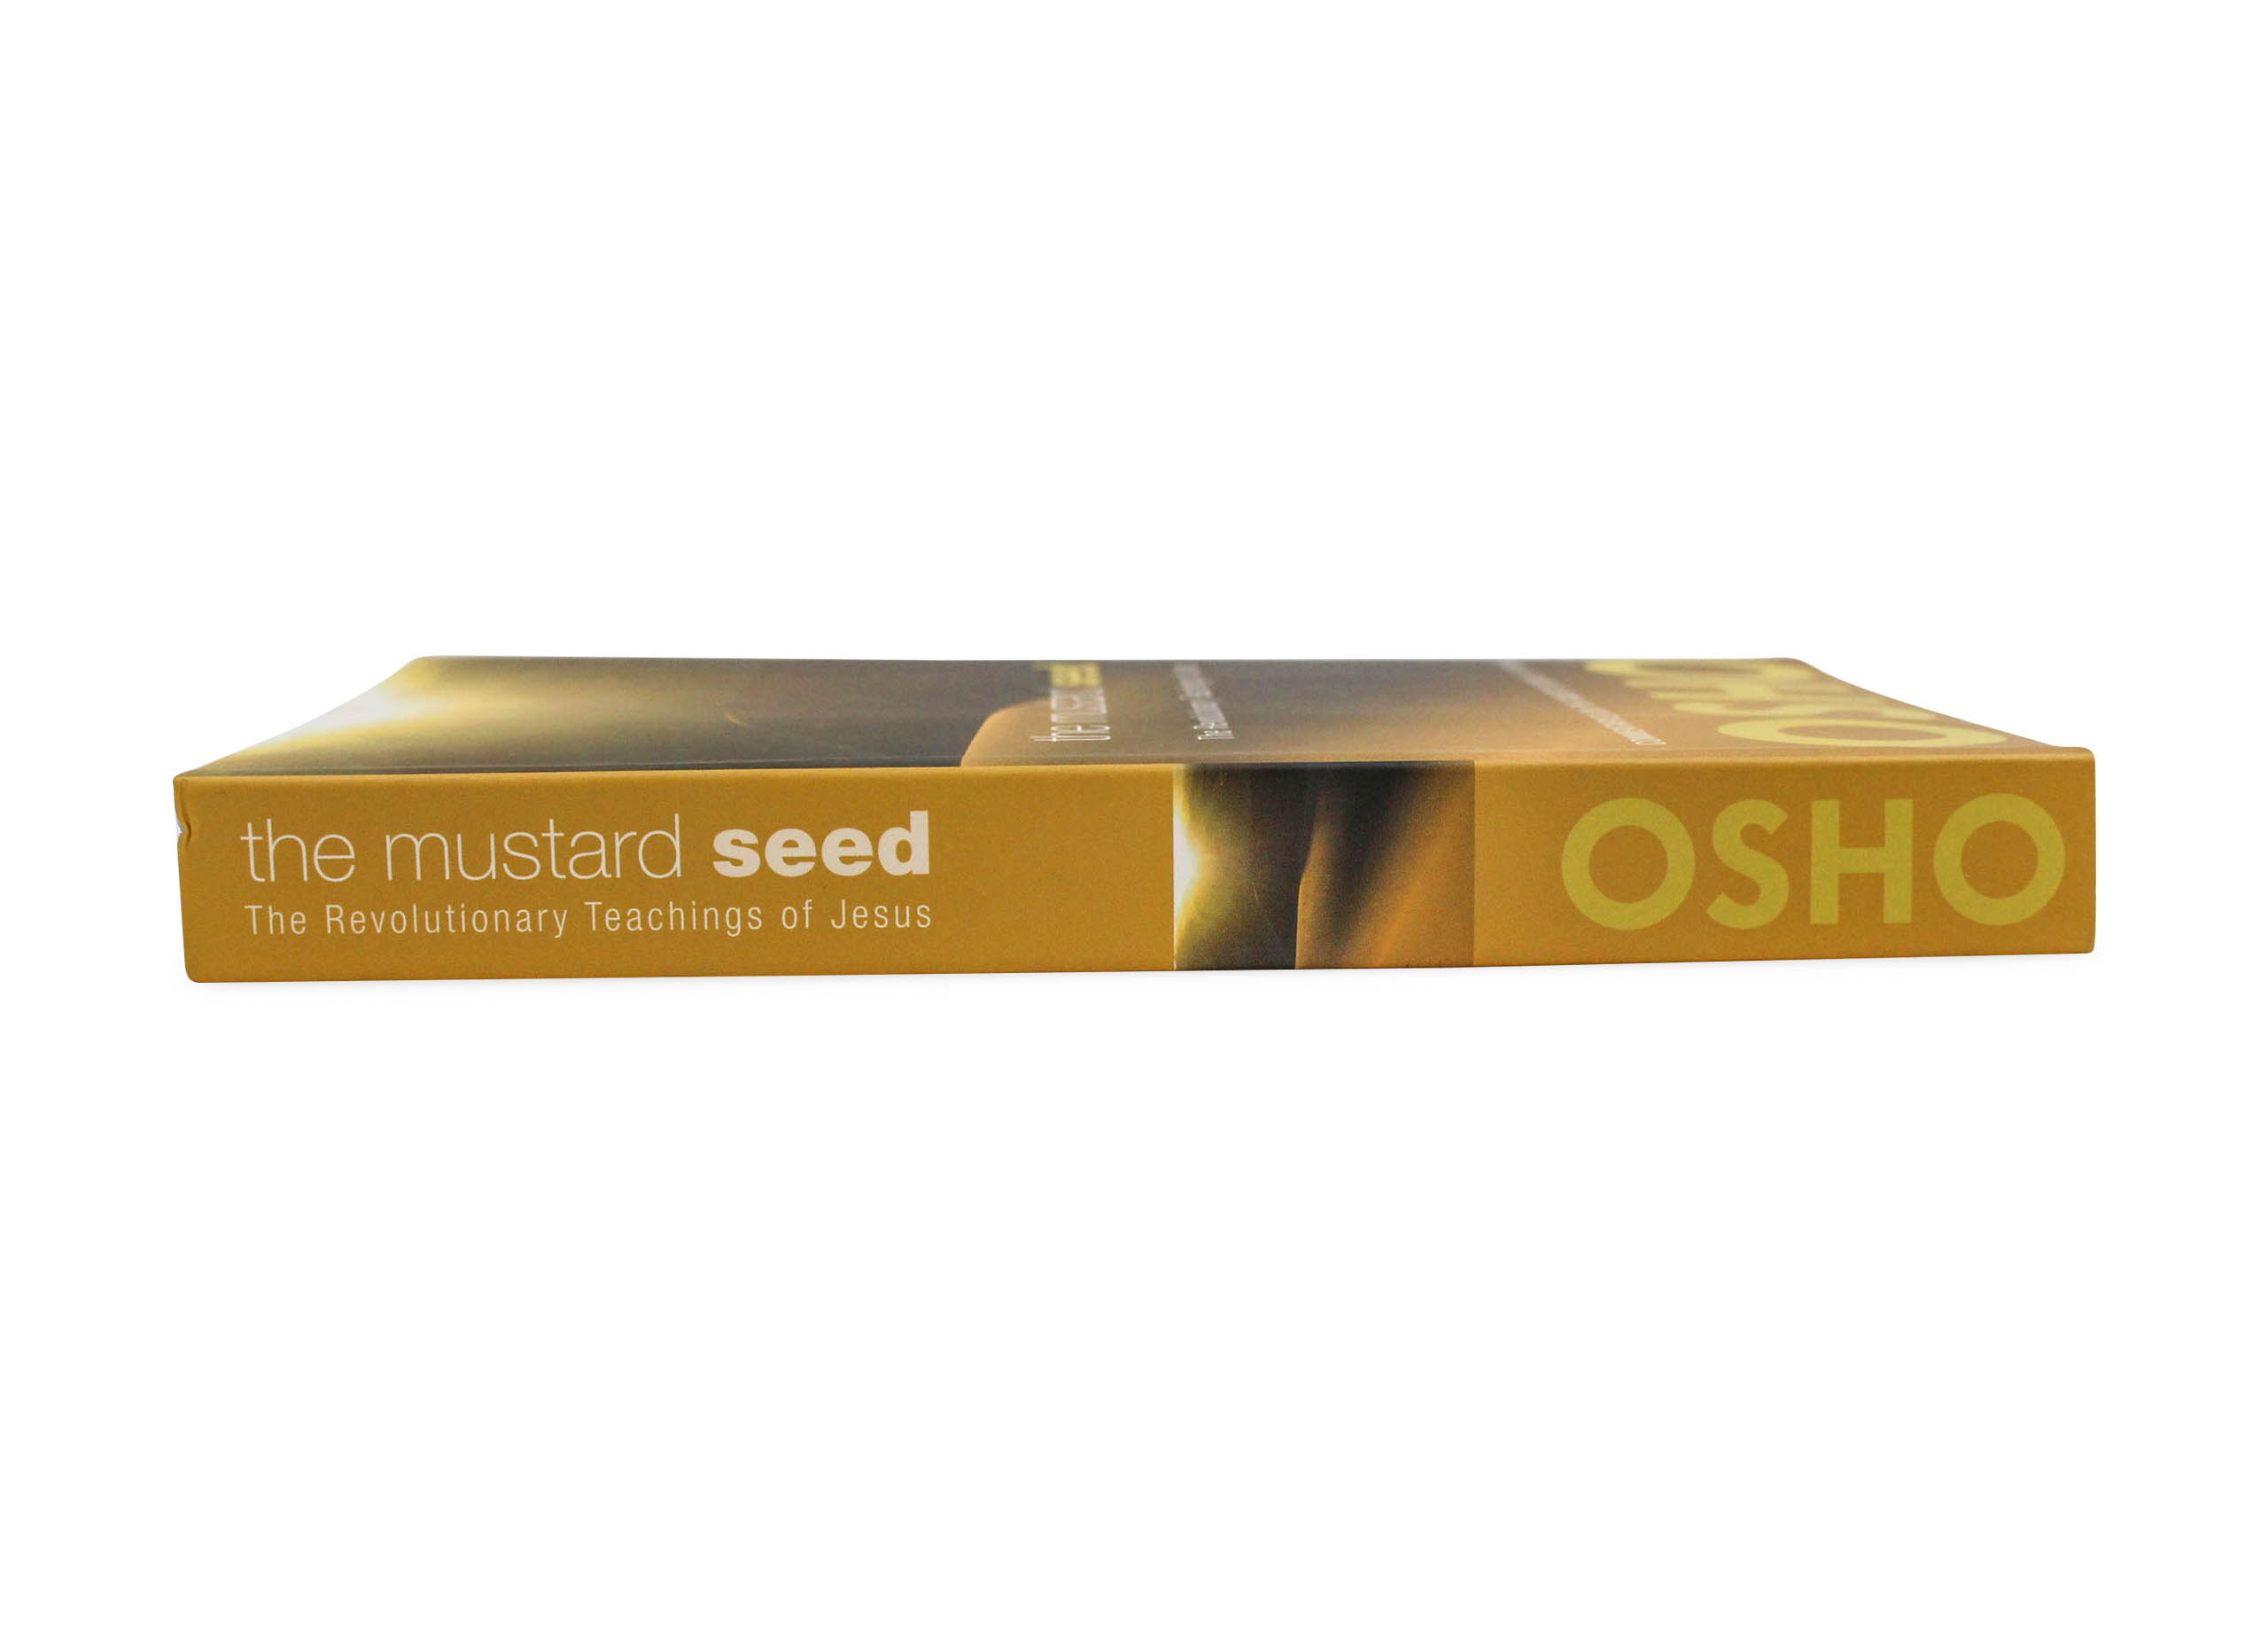 The Mustard Seed Book - Crystal Dreams